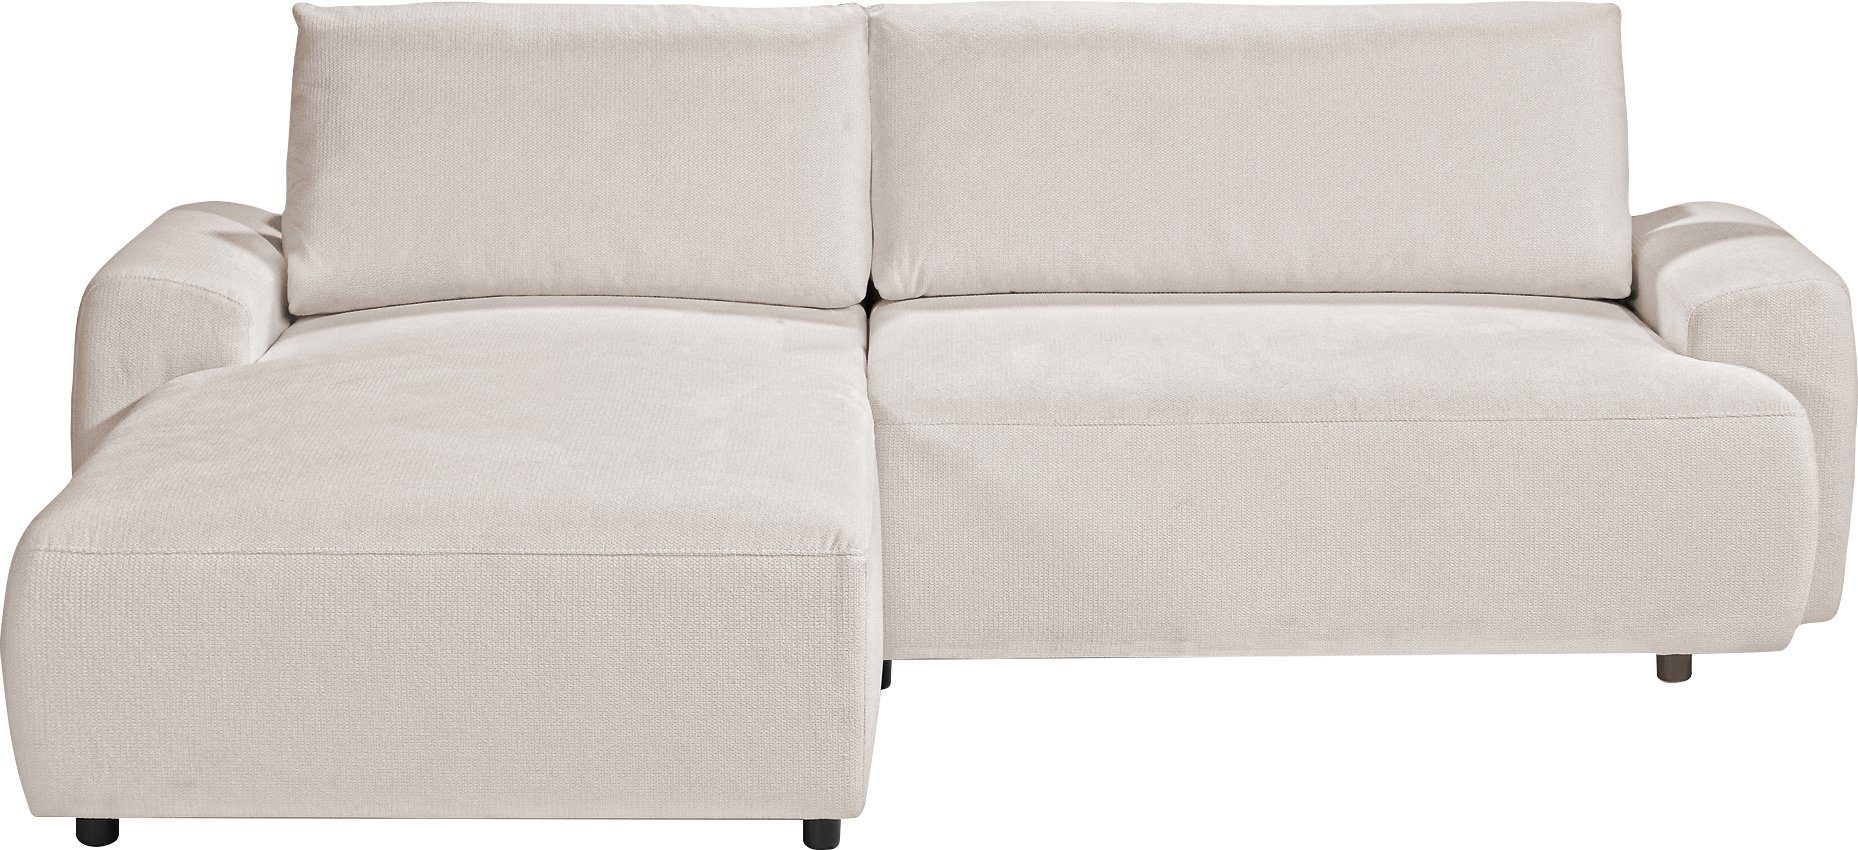 exxpo - sofa fashion Ecksofa Gato, L-Form, 2 Teile, inklusive Bettfunktion und Bettkasten